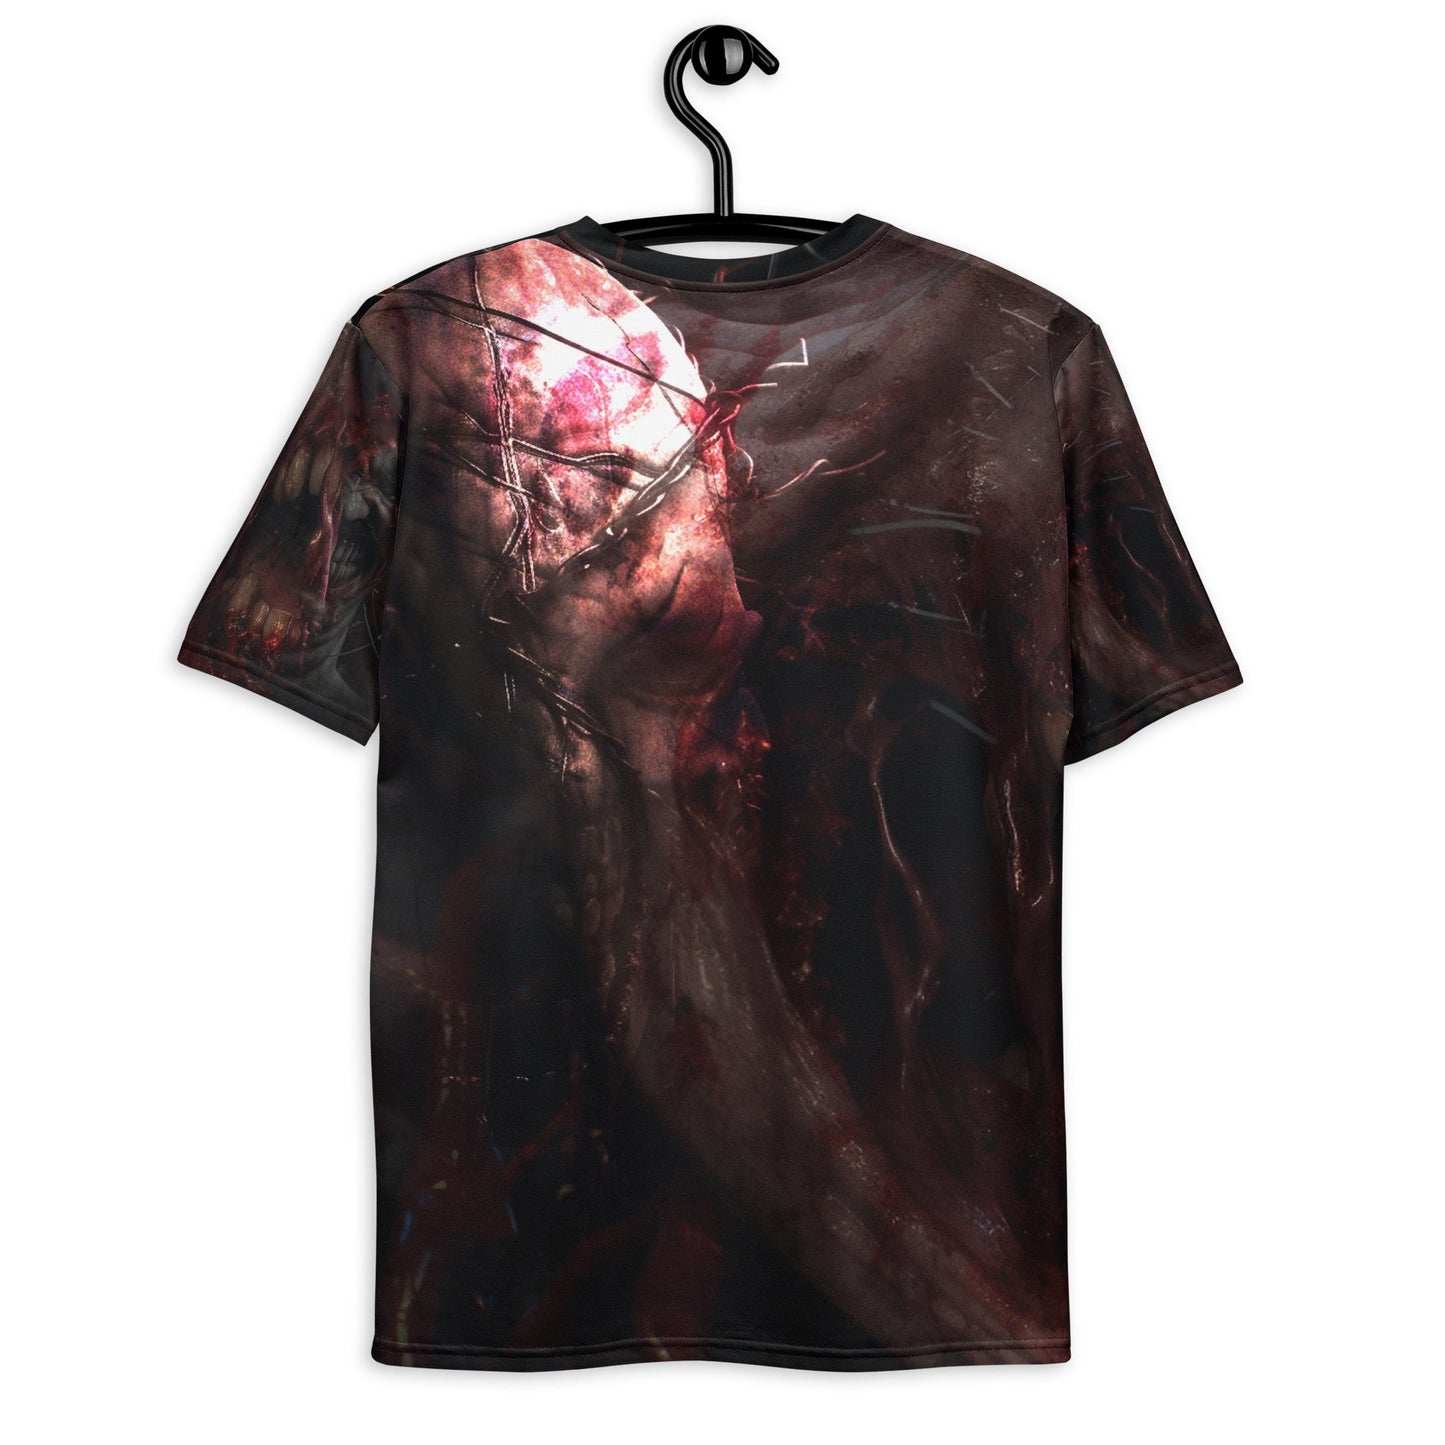 4 Maraheim Madness Men’s t-shirt by Neduz Designs